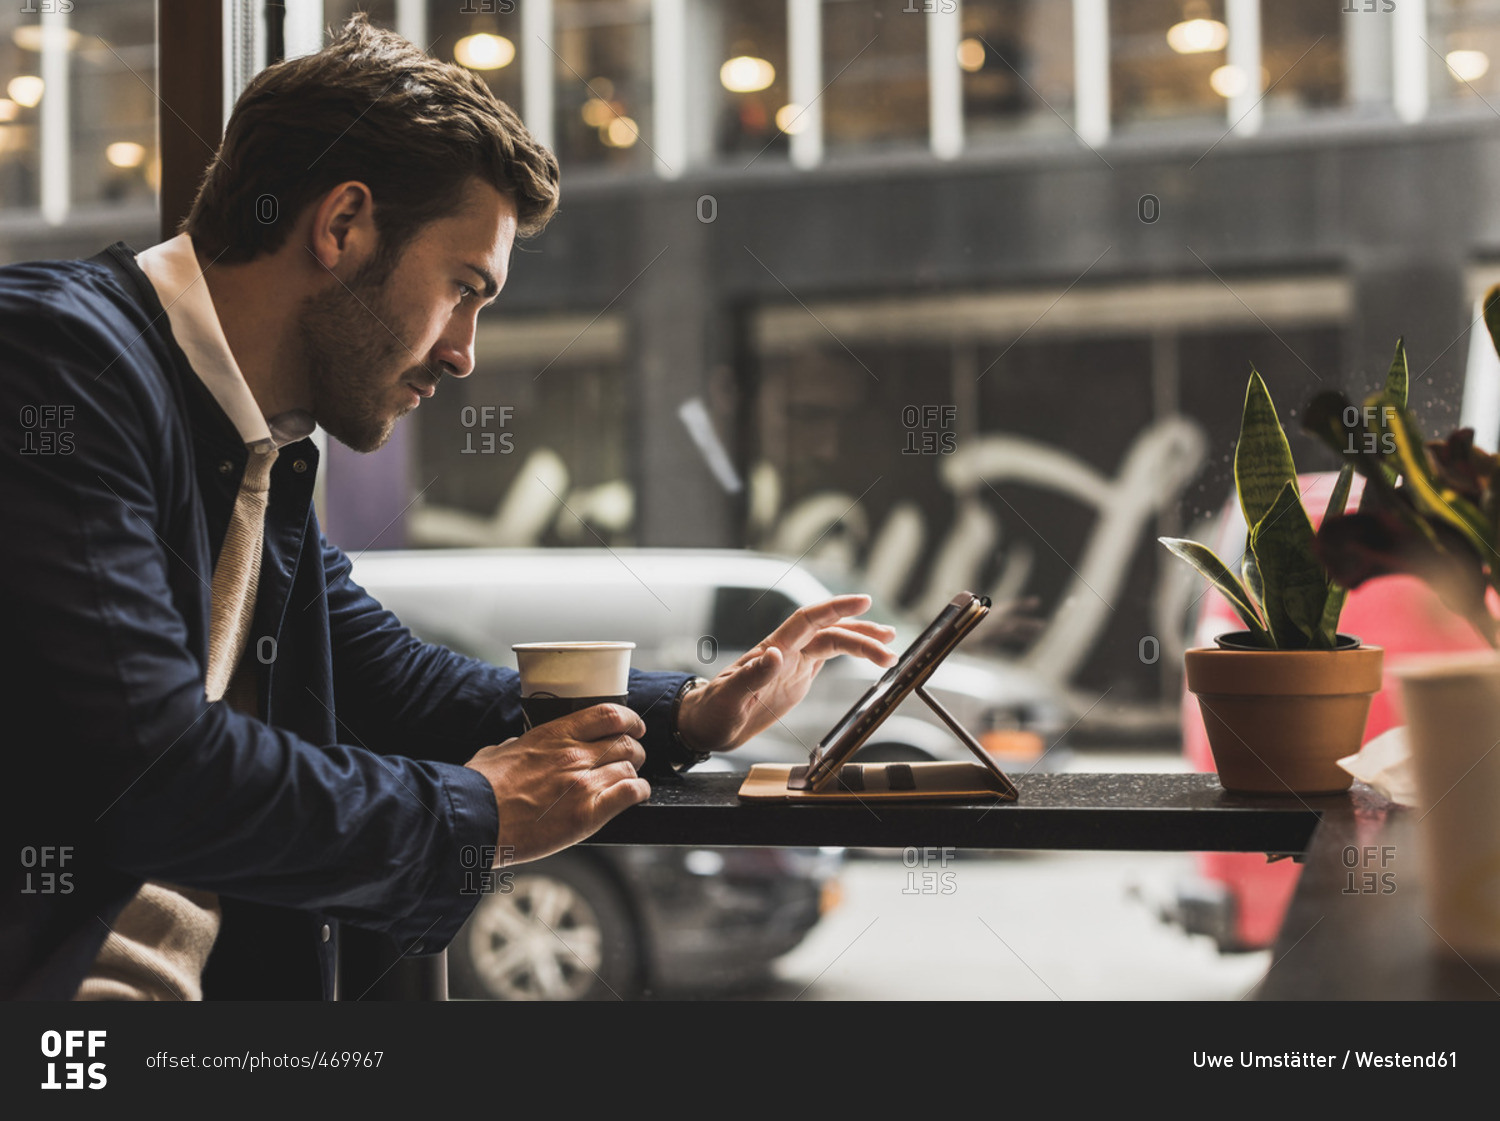 USA- New York City- Businessman sitting in coffee shop- using digital tablet